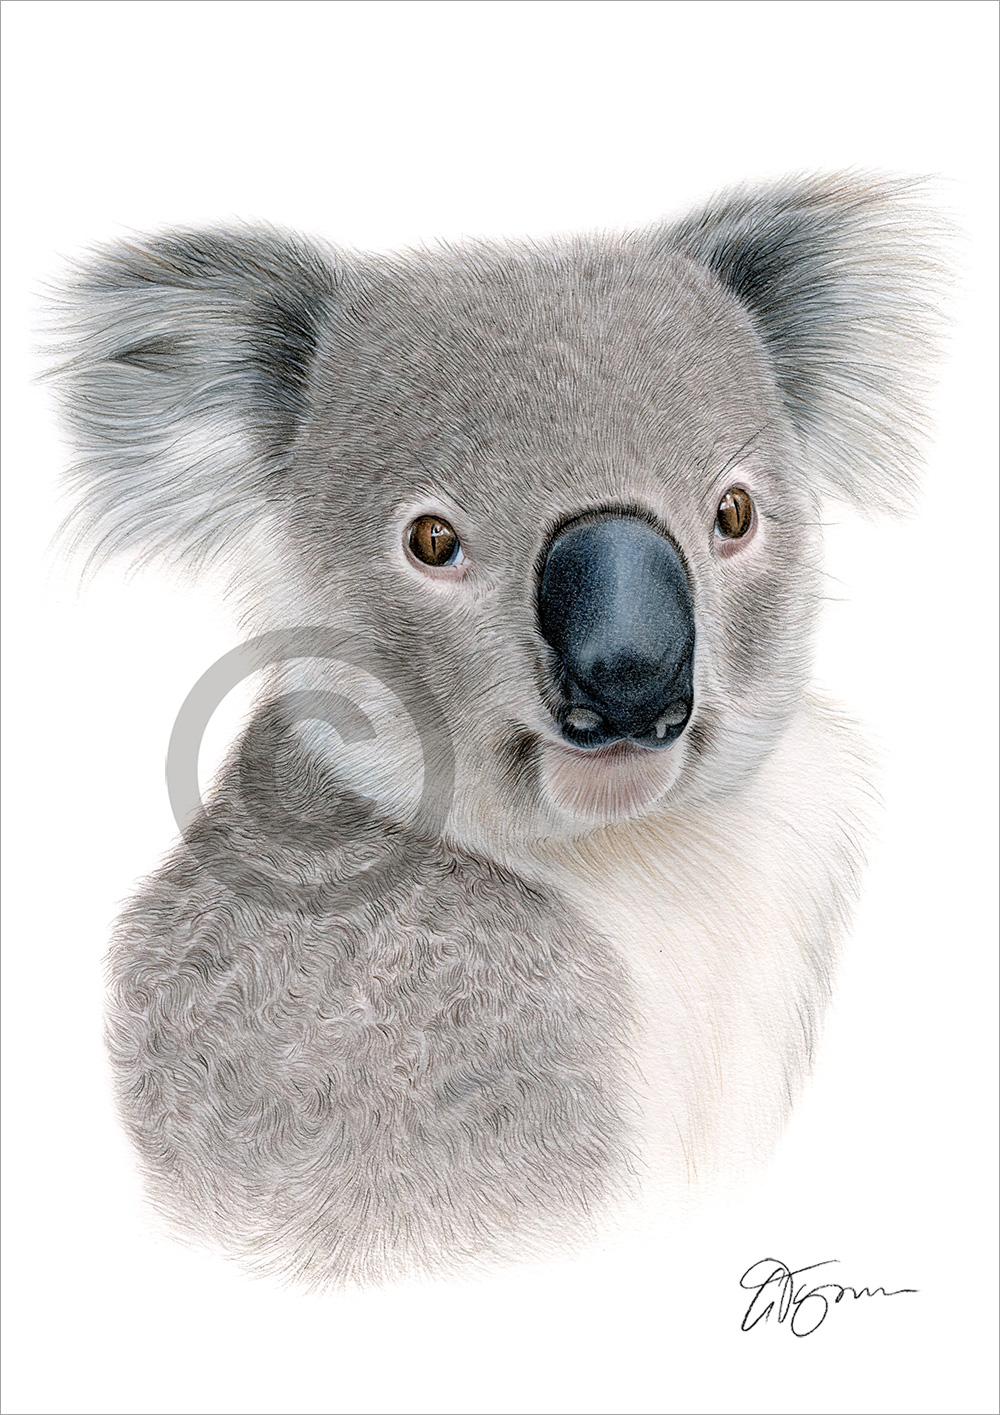 Colour pencil drawing of a Koala Bear by UK artist Gary Tymon